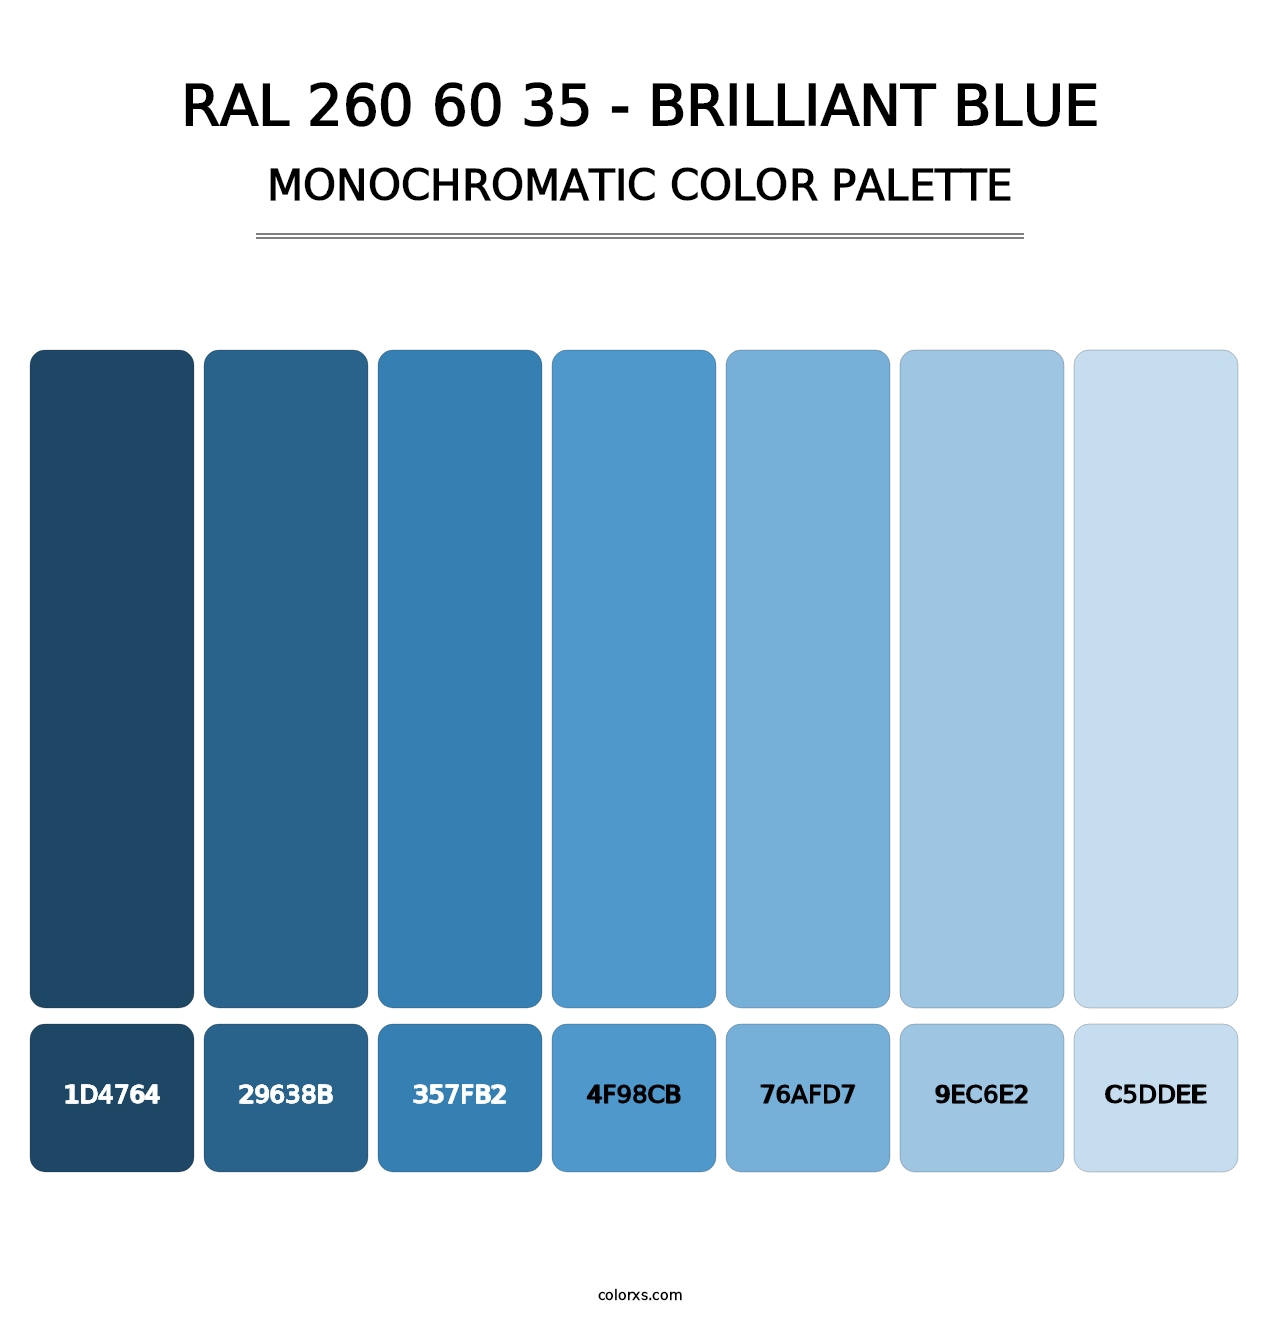 RAL 260 60 35 - Brilliant Blue - Monochromatic Color Palette